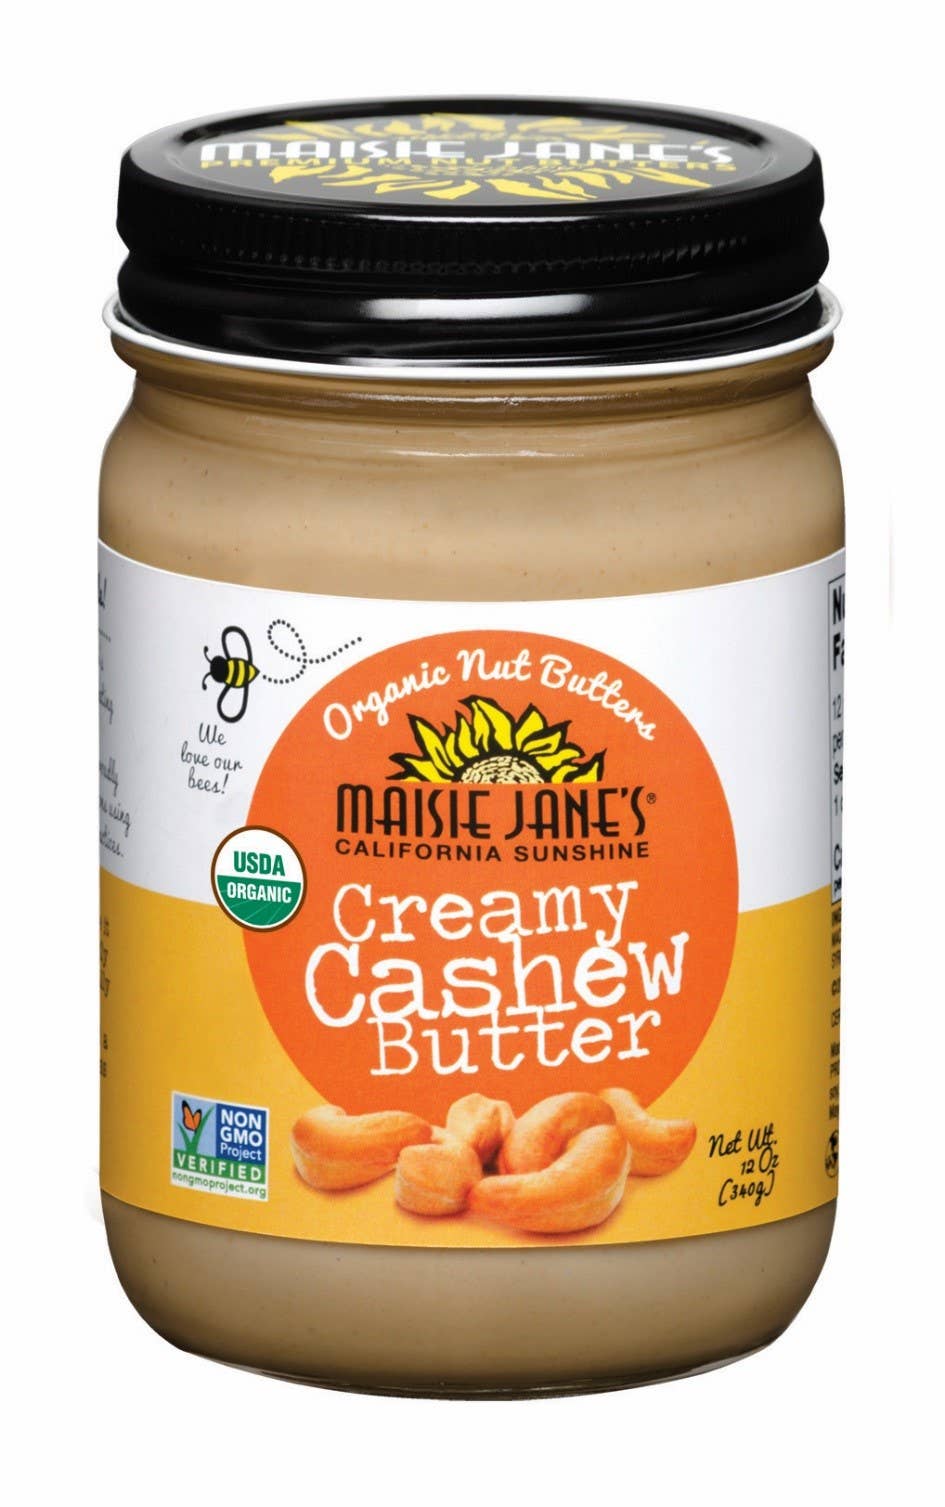 Morganics Choice Creamy Organic Cashew Butter - No Palm Oil, No added sugar - 12 oz